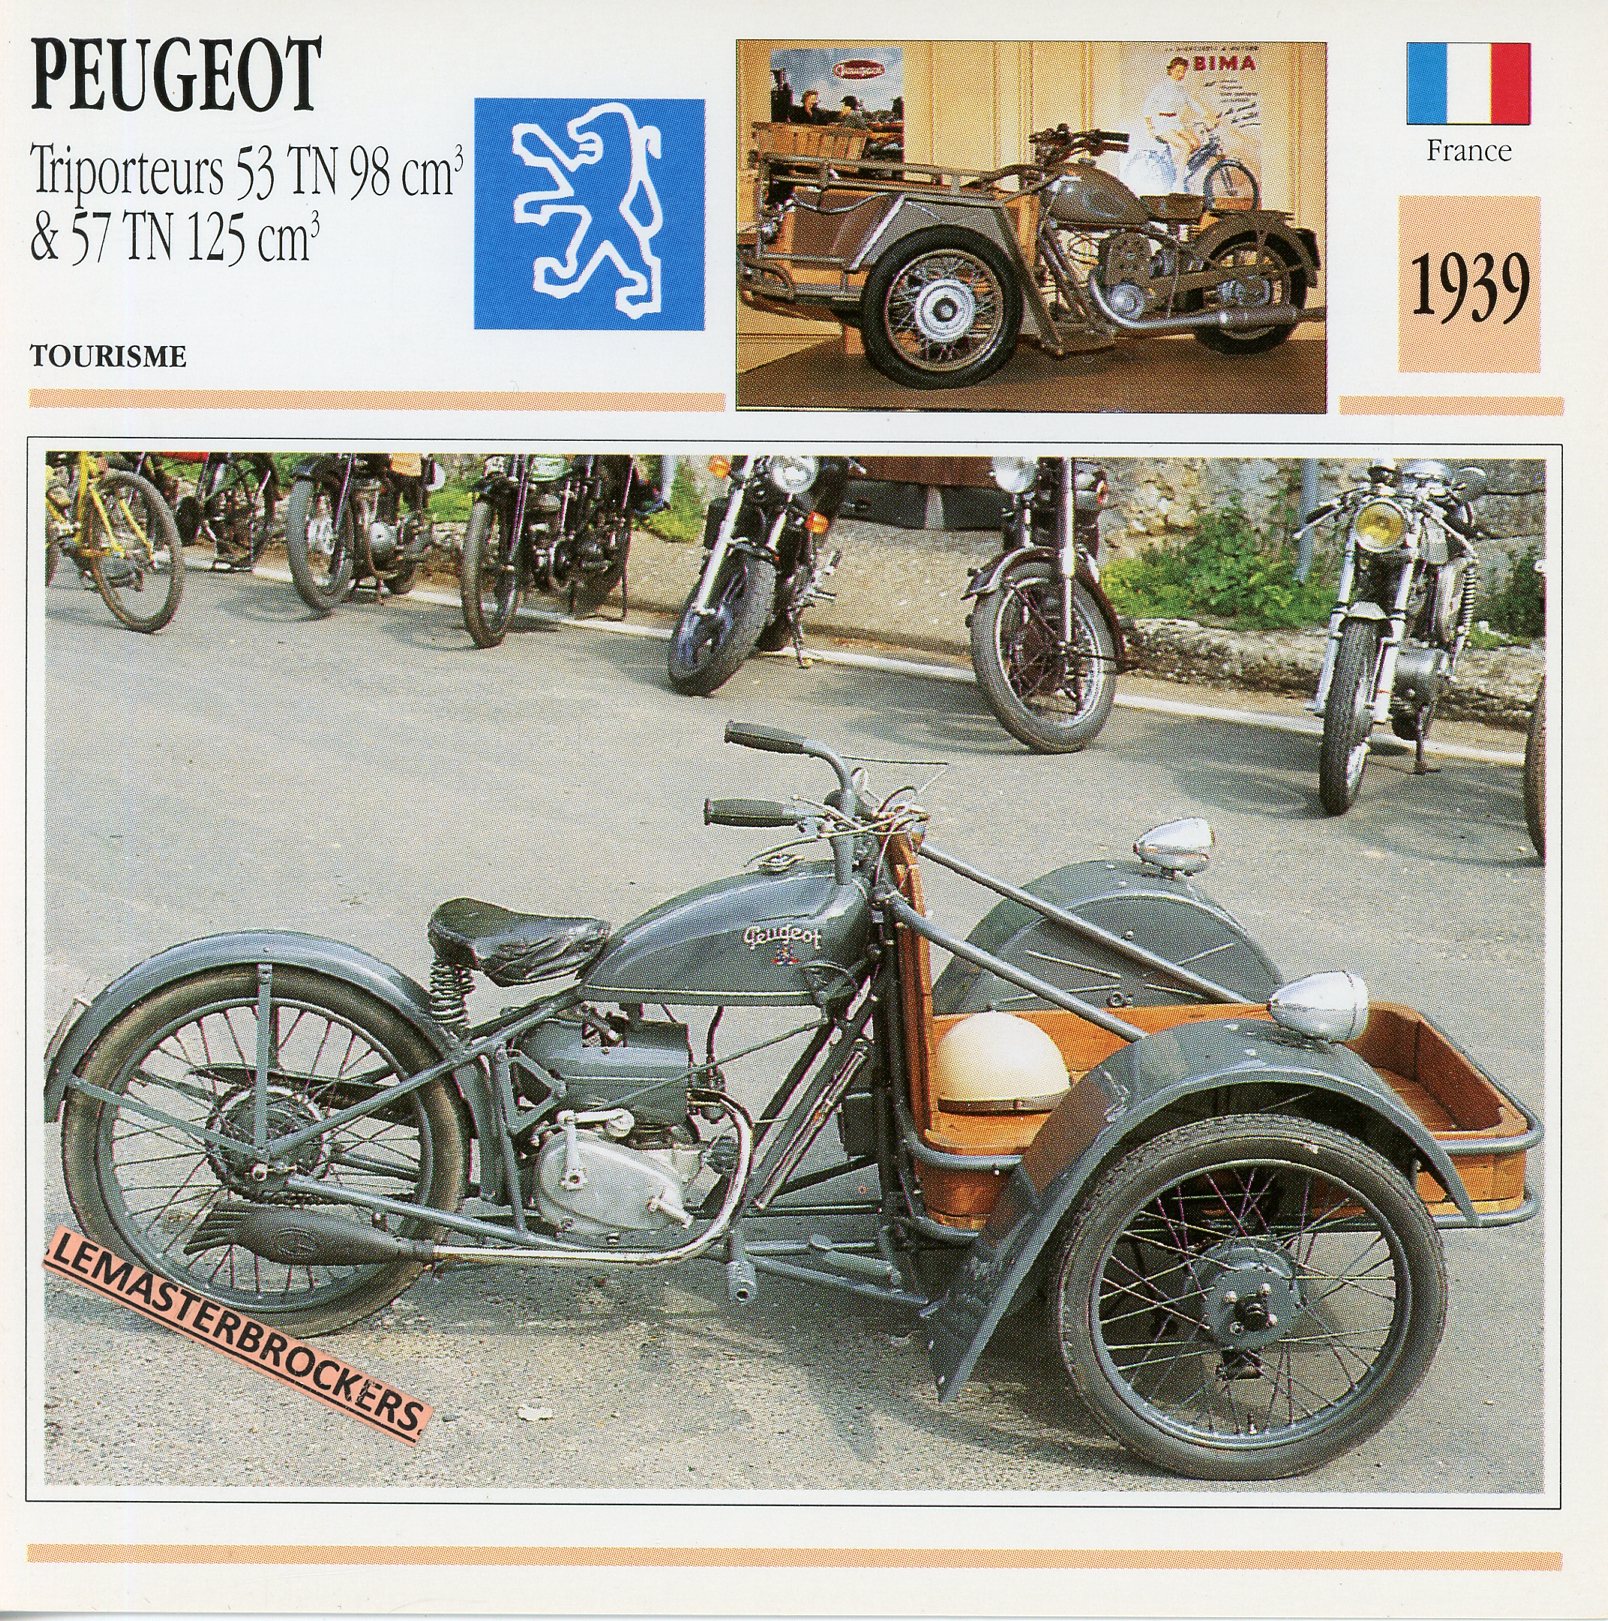 PEUGEOT-TRIPORTEURS-1939-LEMASTERBROCKERS-FICHE-MOTO-ATLAS-CARD